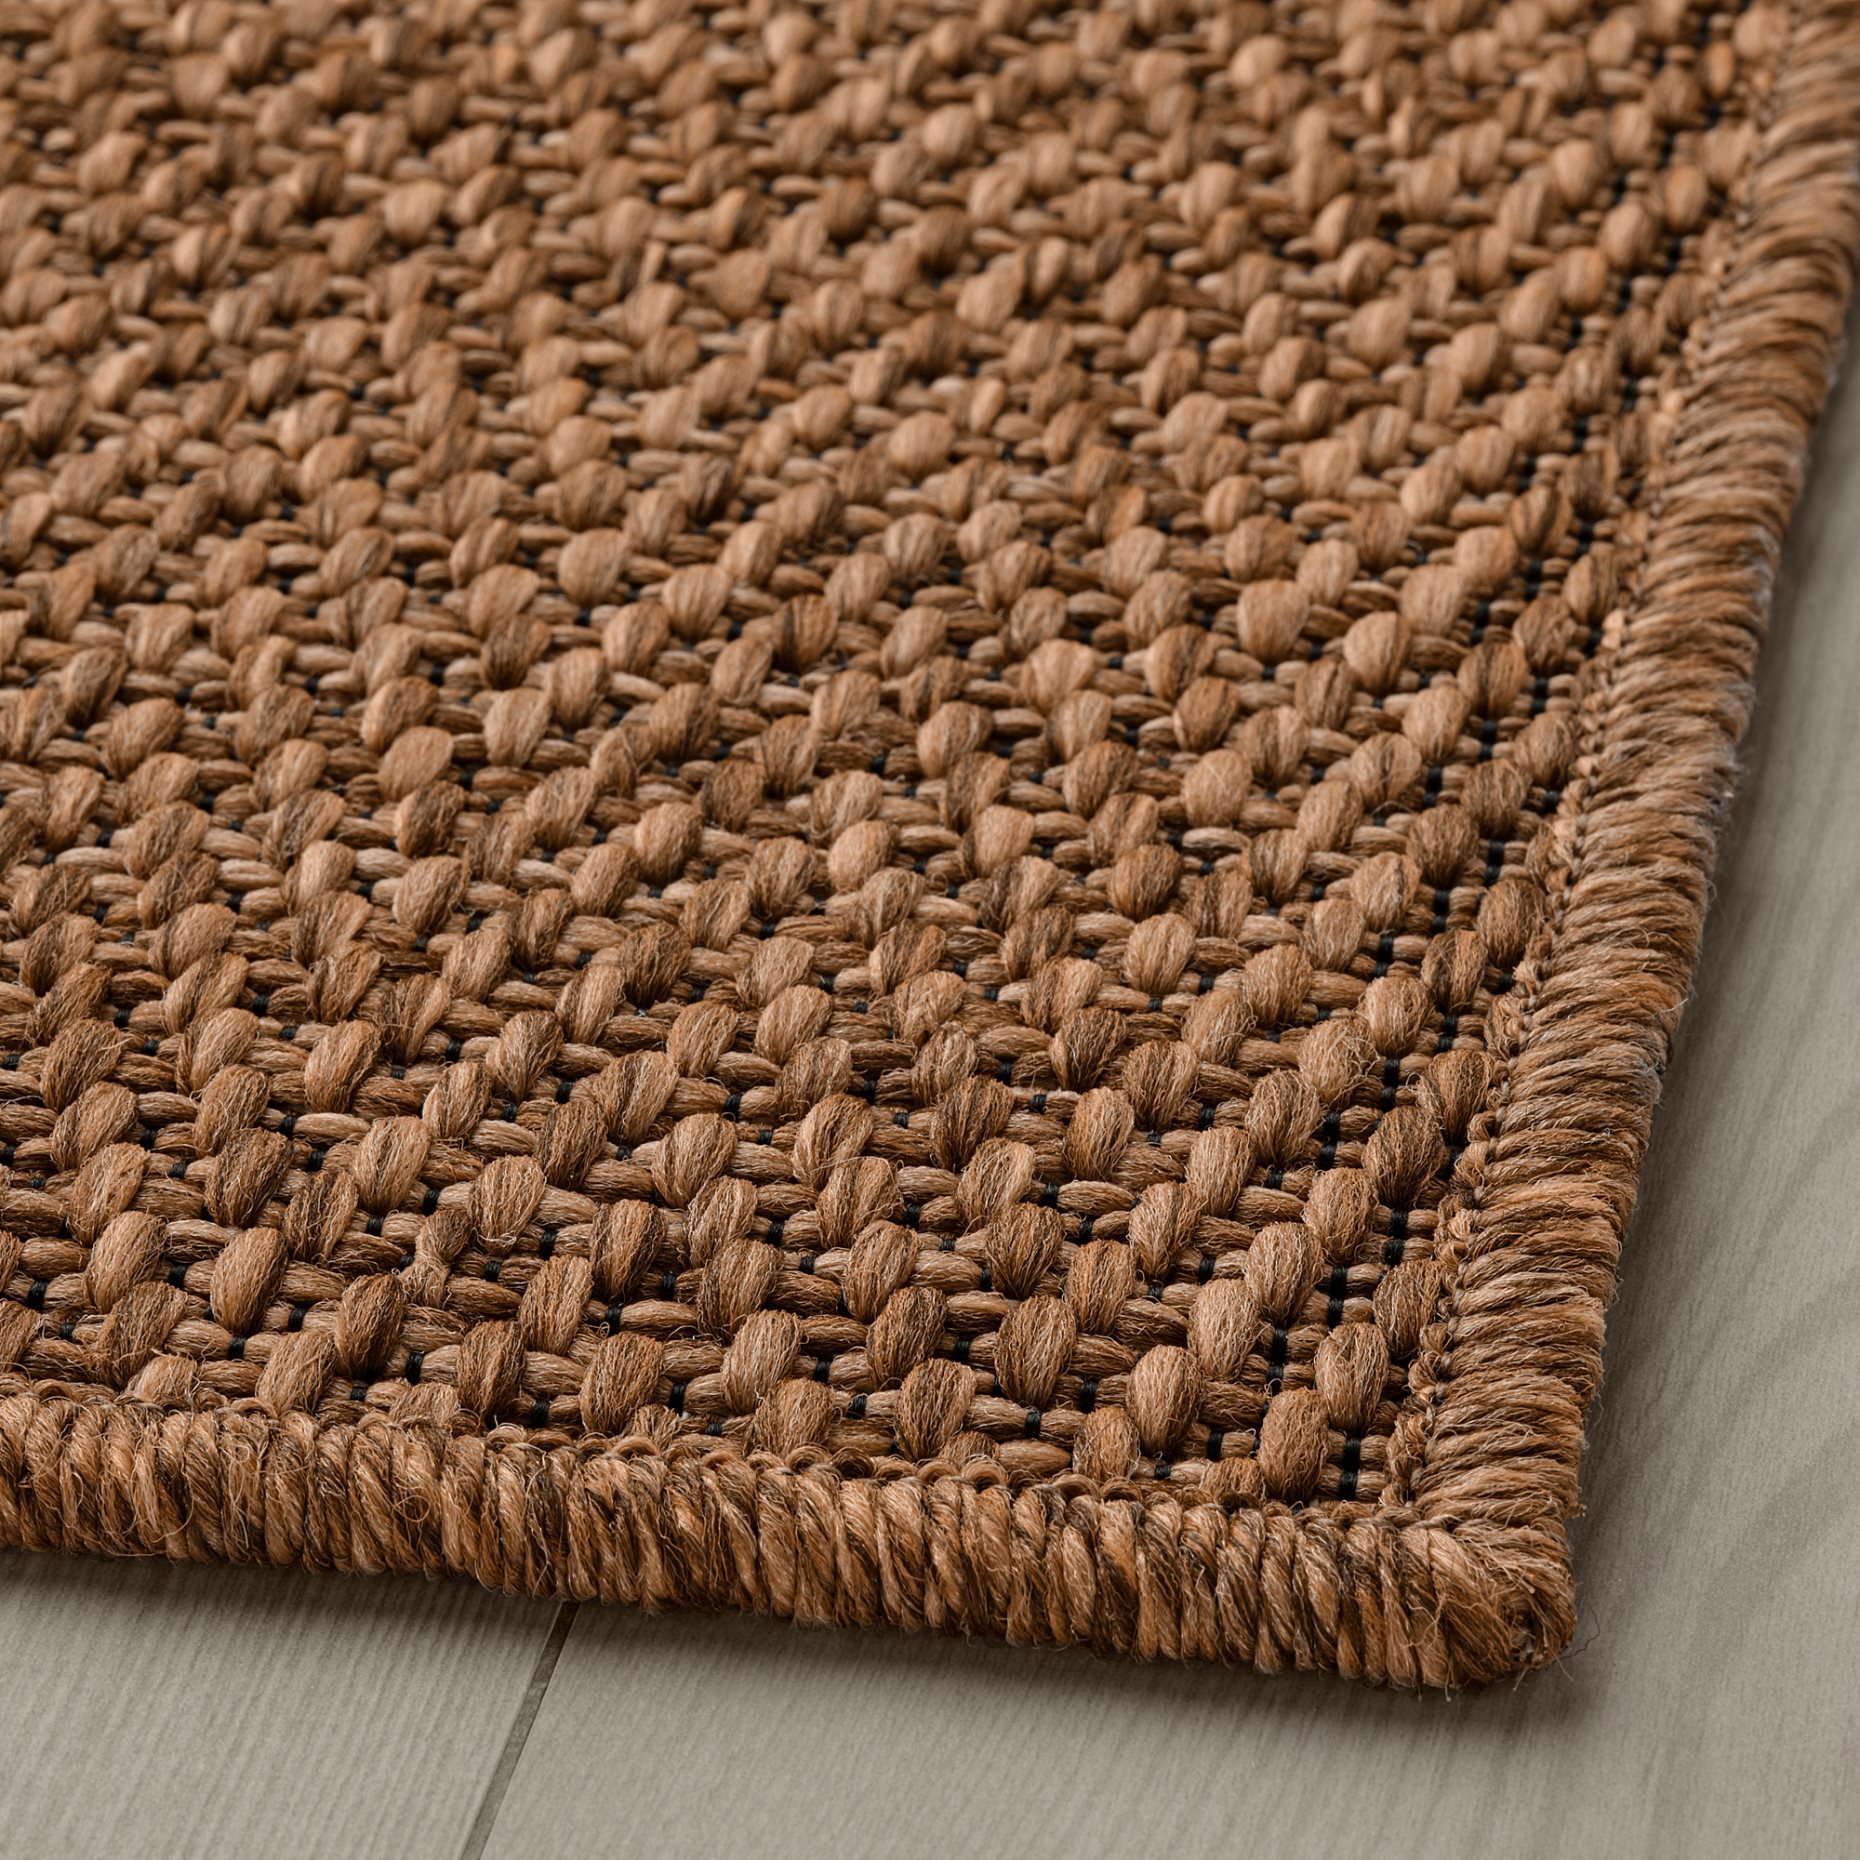 LYDERSHOLM, rug flatwoven, in/outdoor, 160x230 cm, 204.954.15